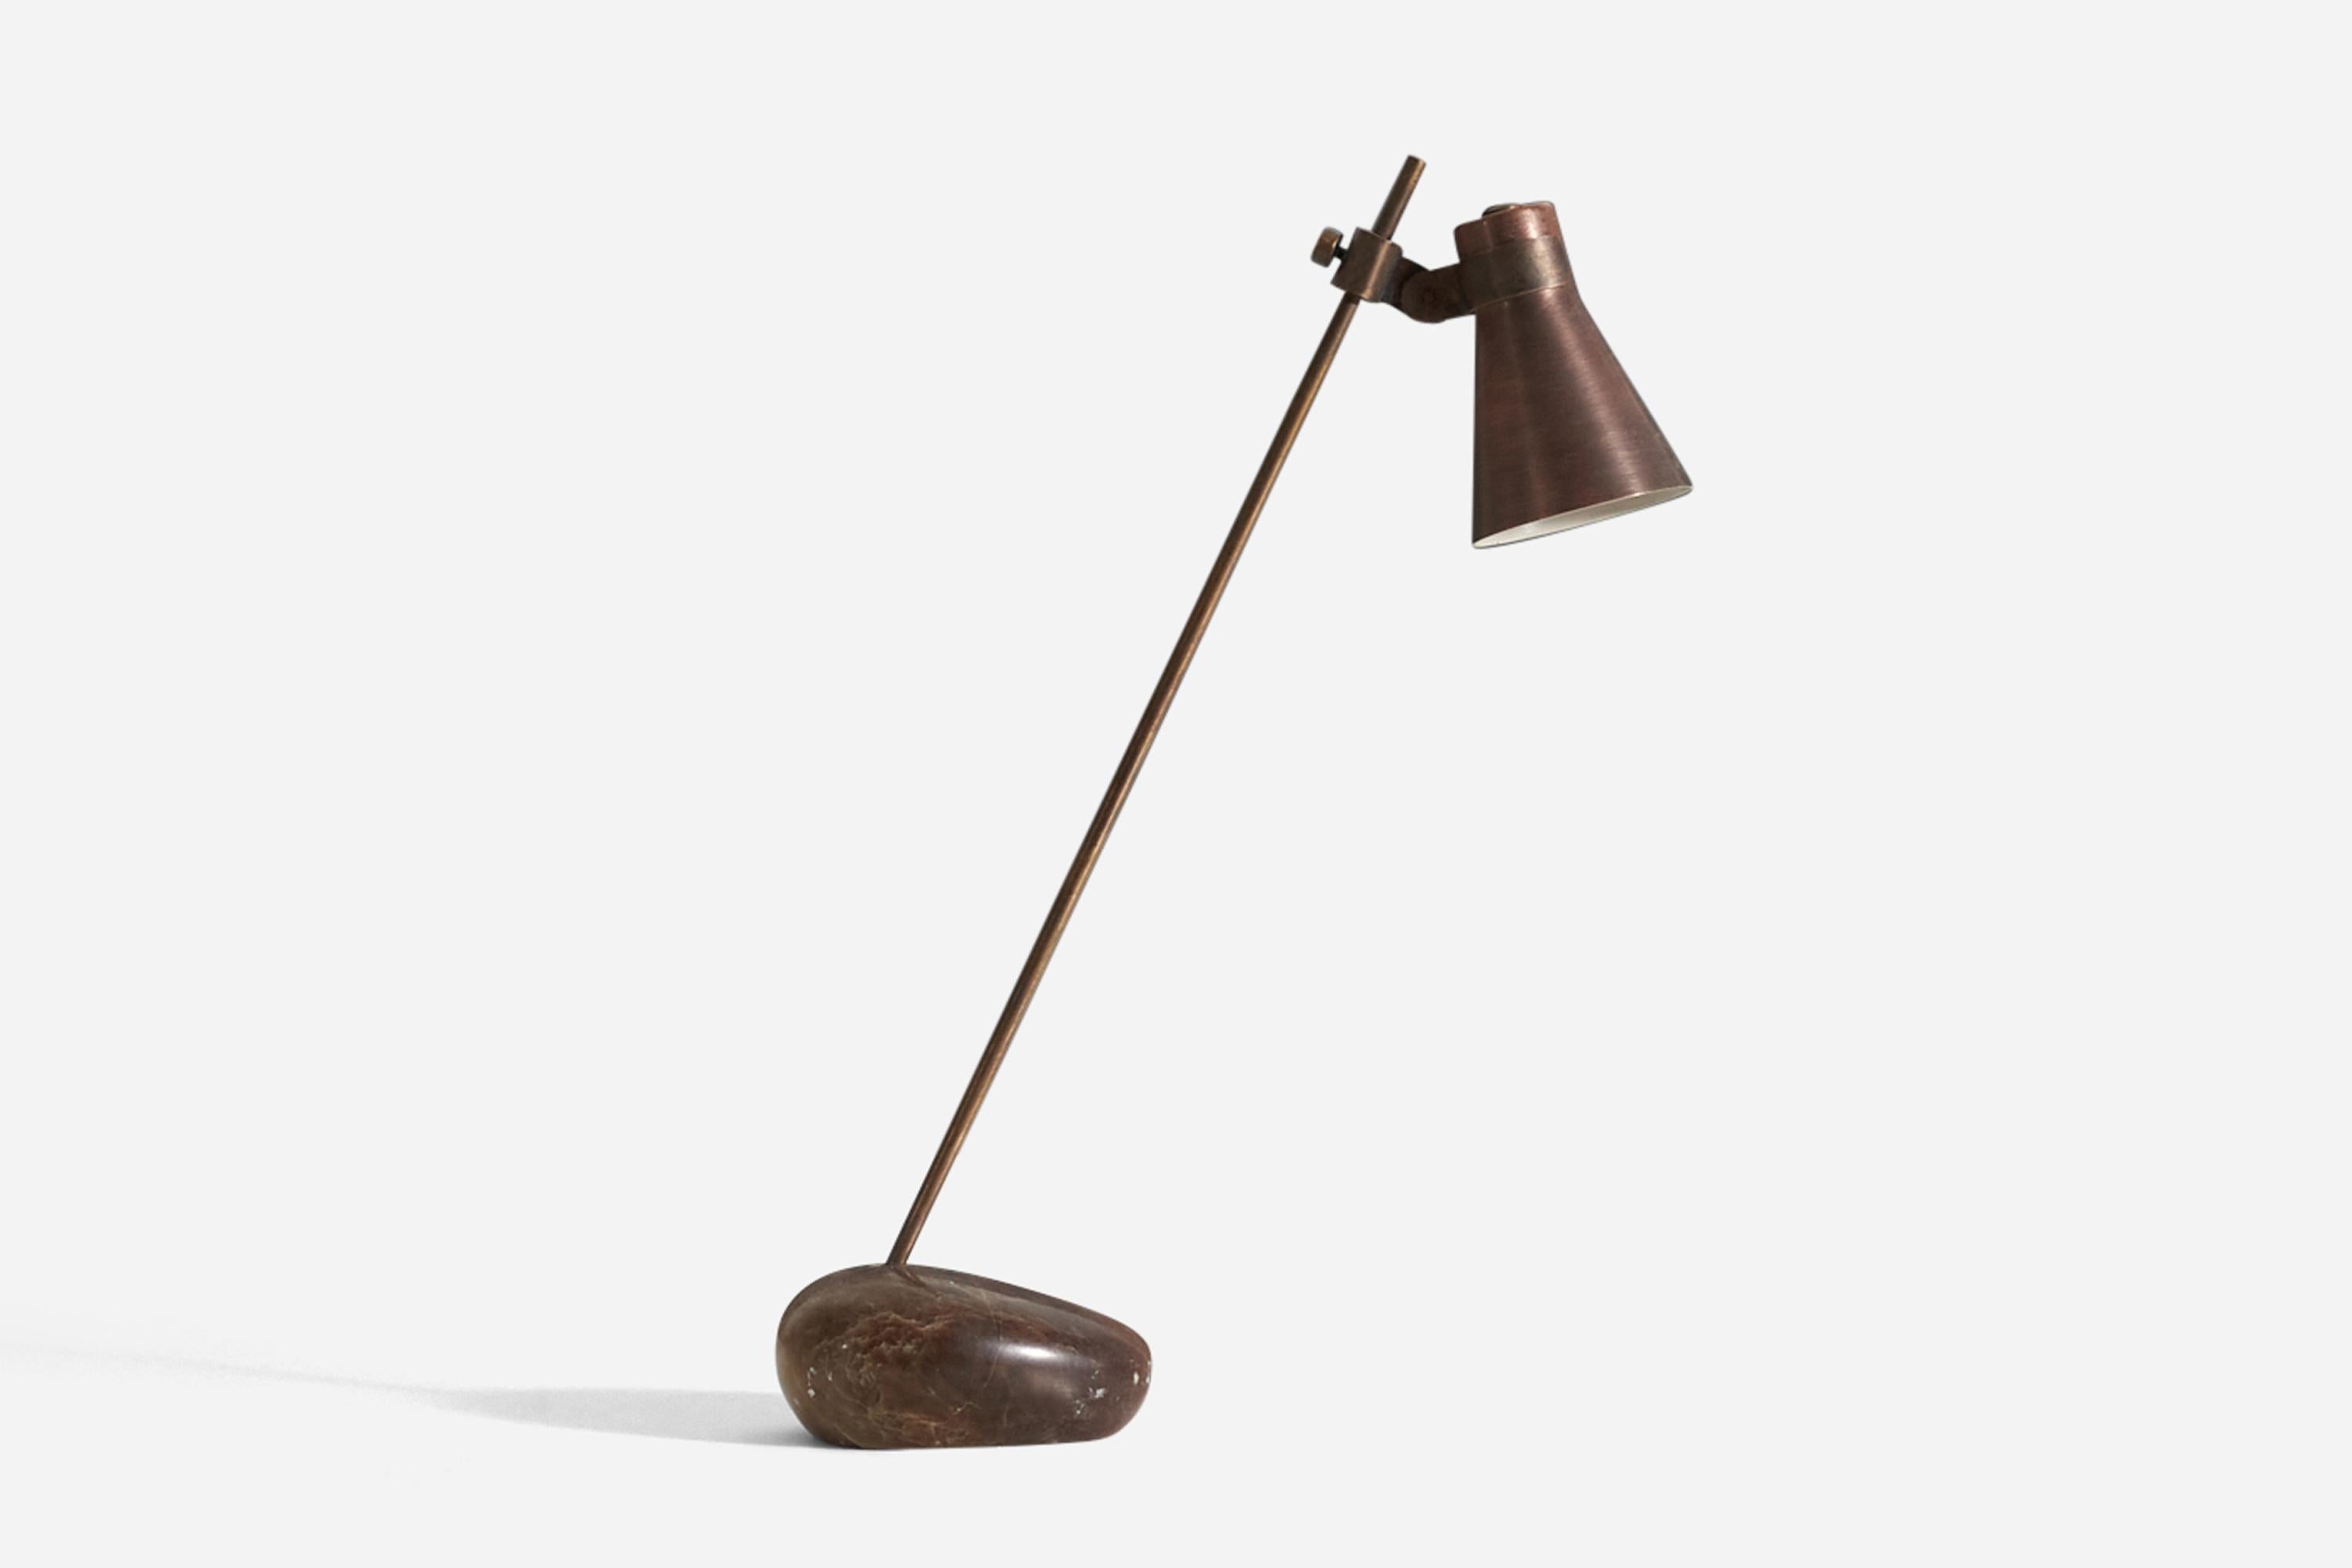 Italian Luigi Caccia Dominioni ‘Sasso’ Table Lamp, River Rock, Brass, Metal, Italy 1948